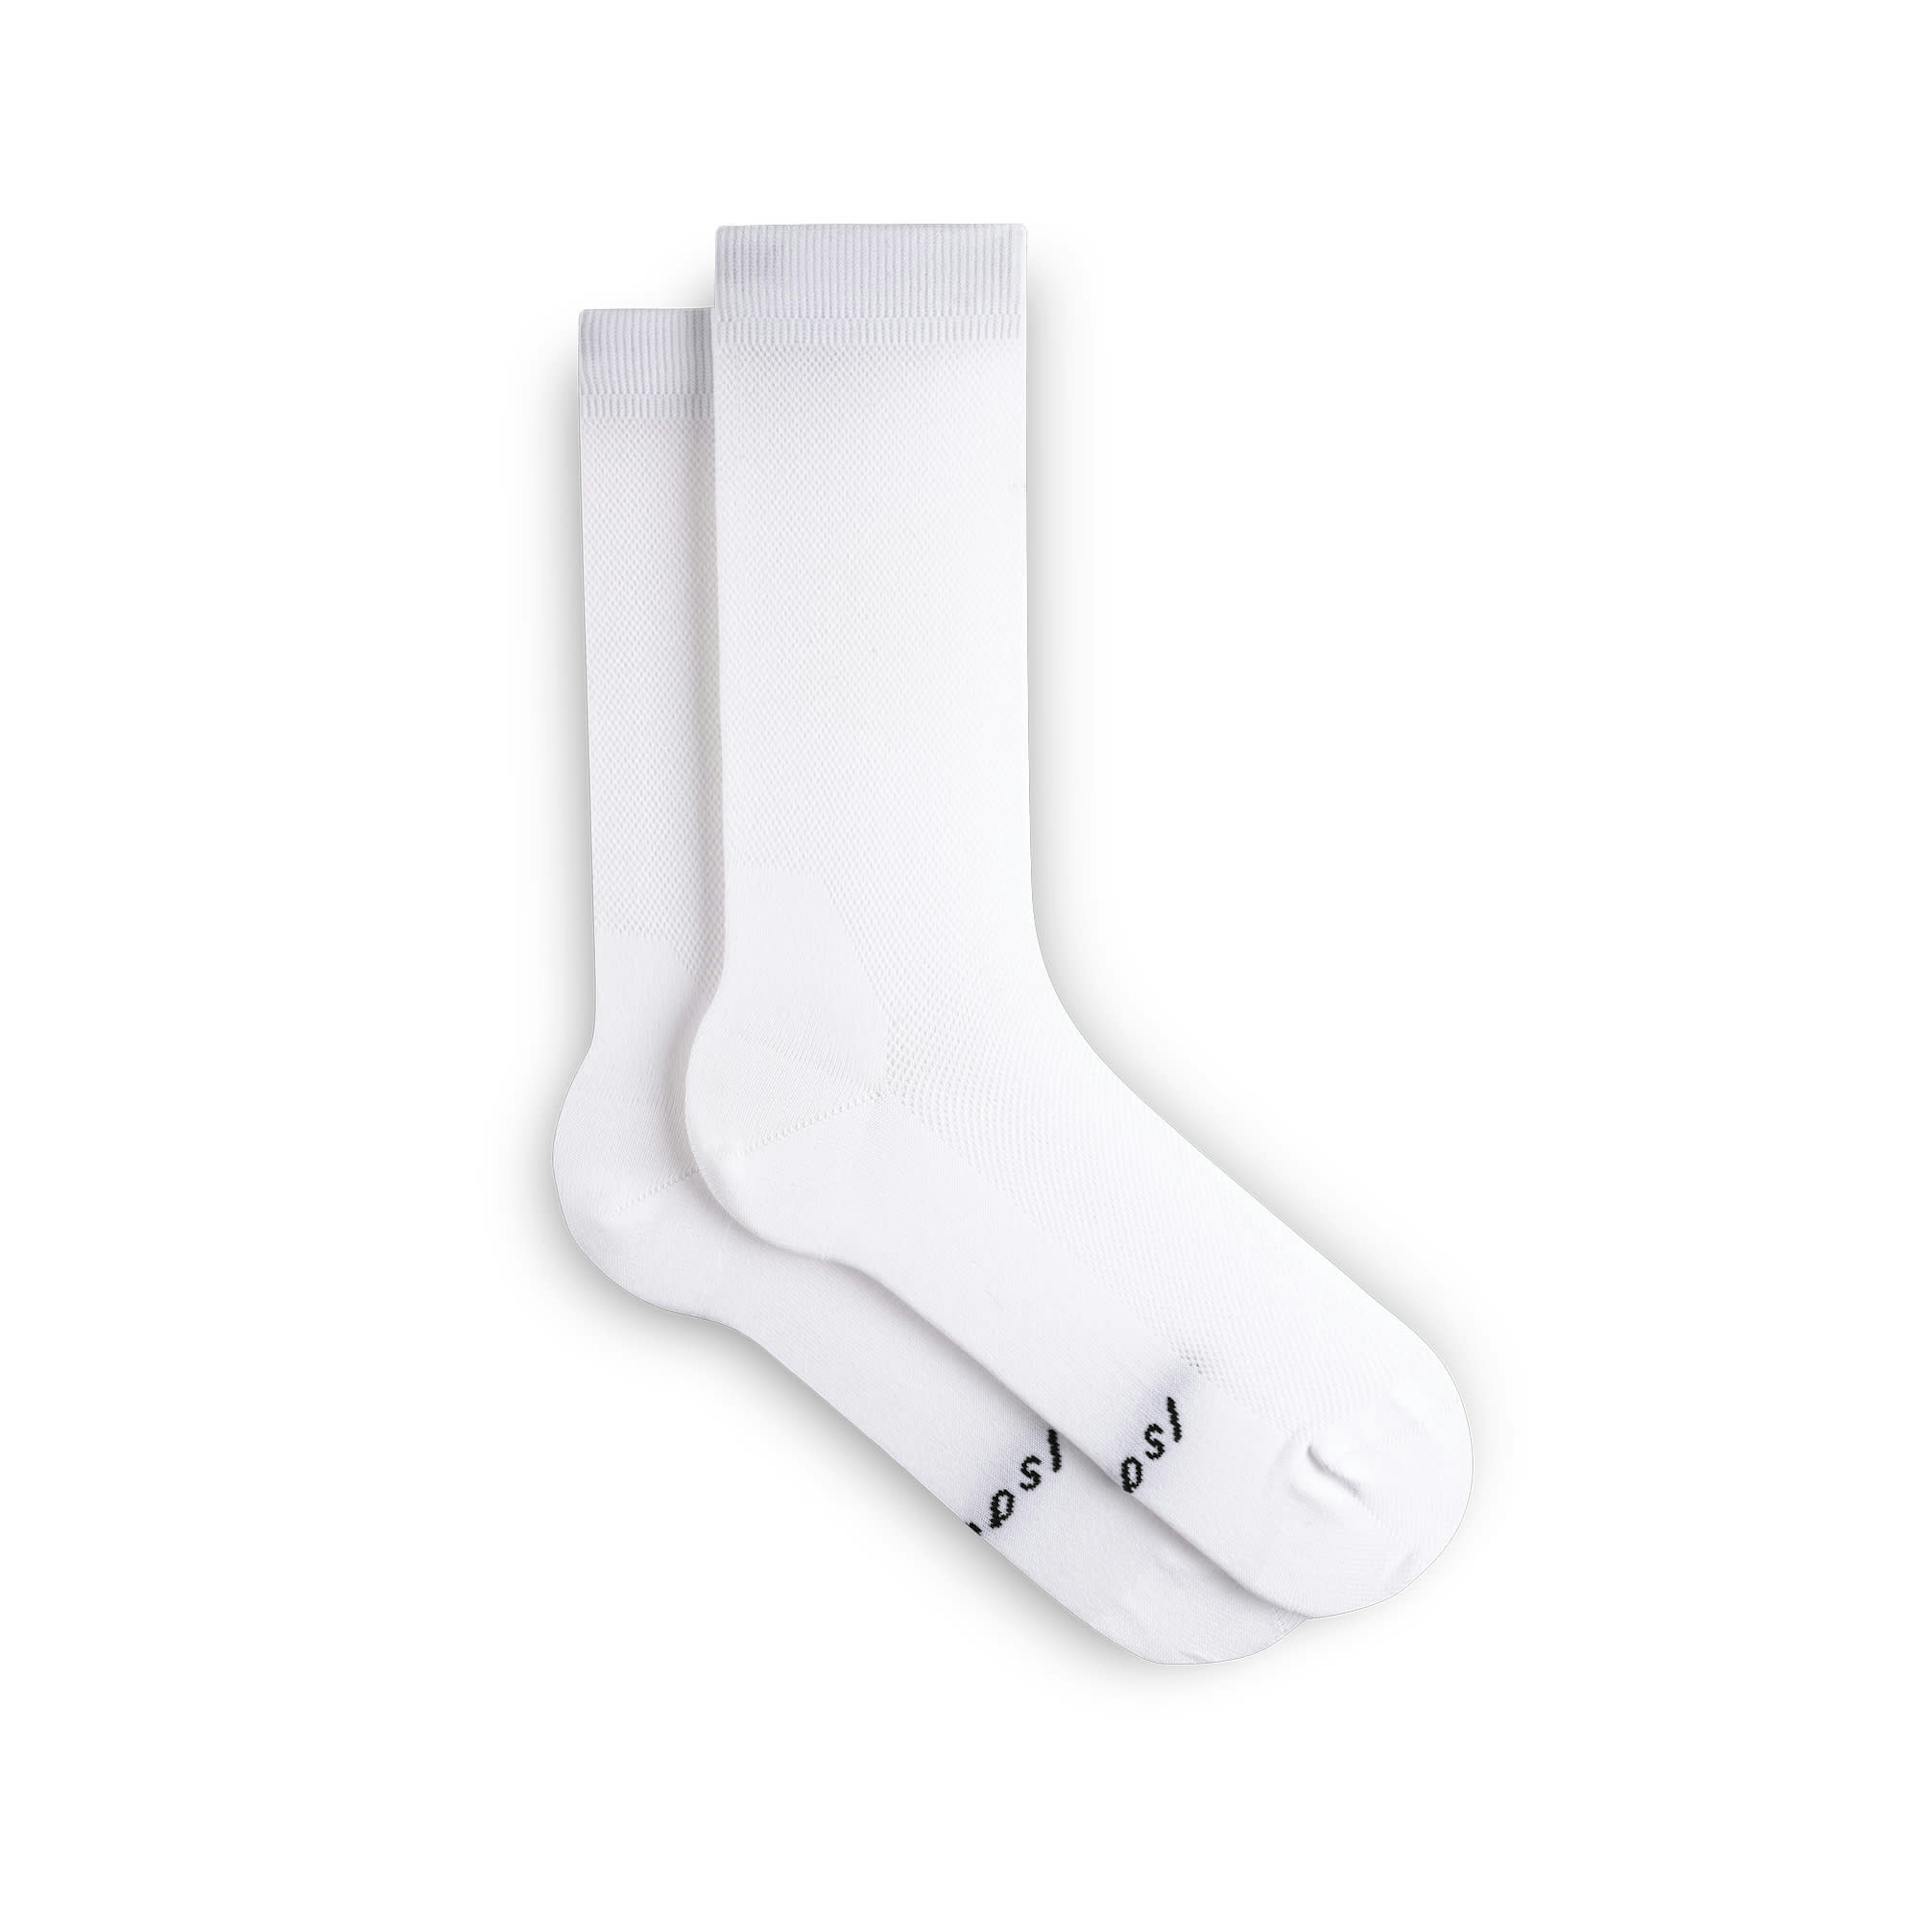 Signature Climber's Light Socks - White
                        